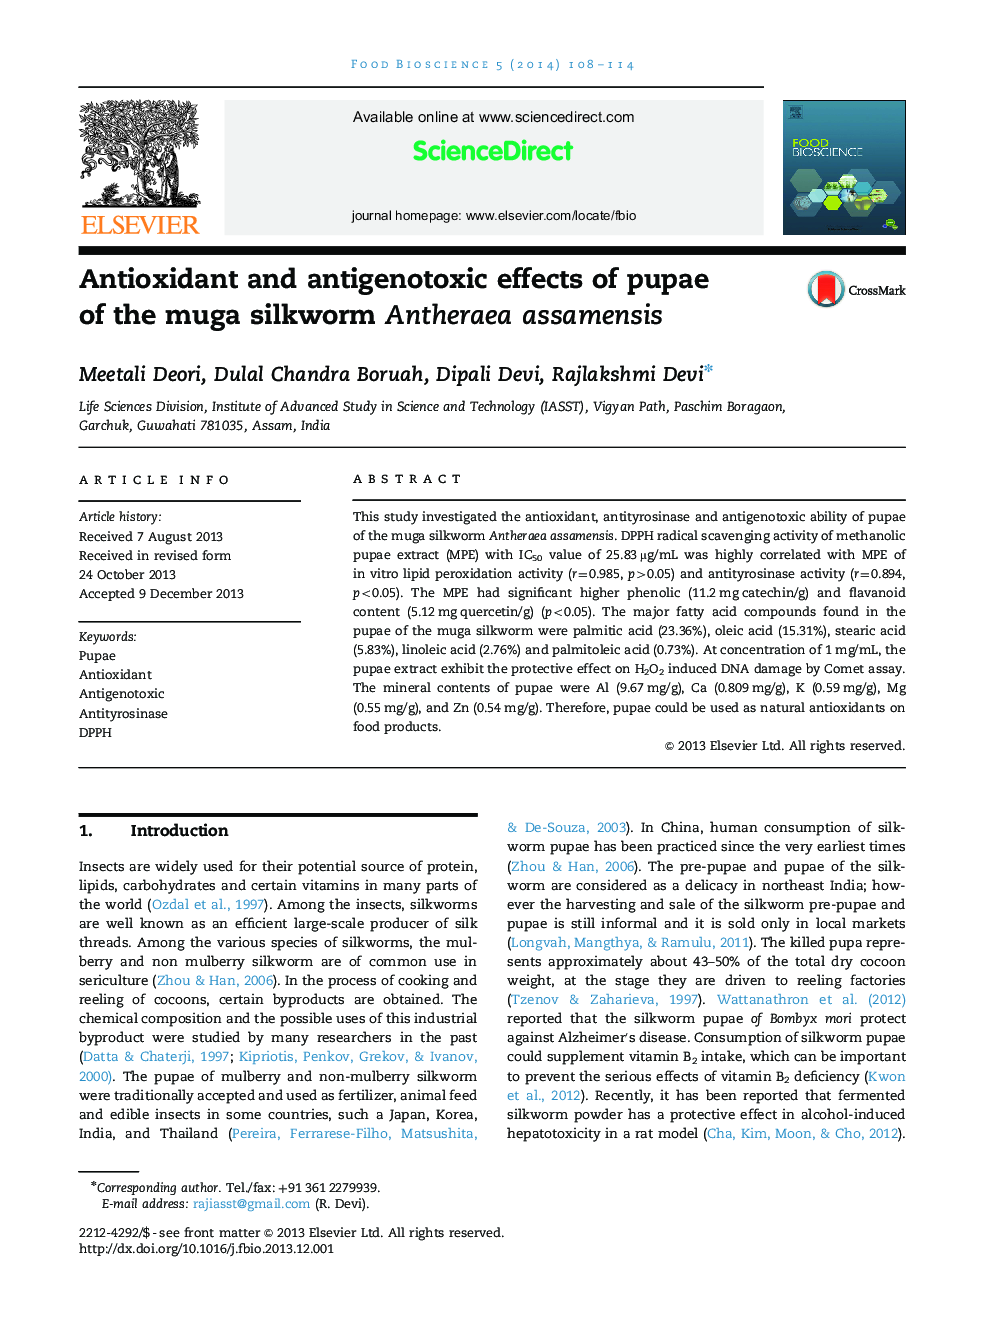 Antioxidant and antigenotoxic effects of pupae of the muga silkworm Antheraea assamensis